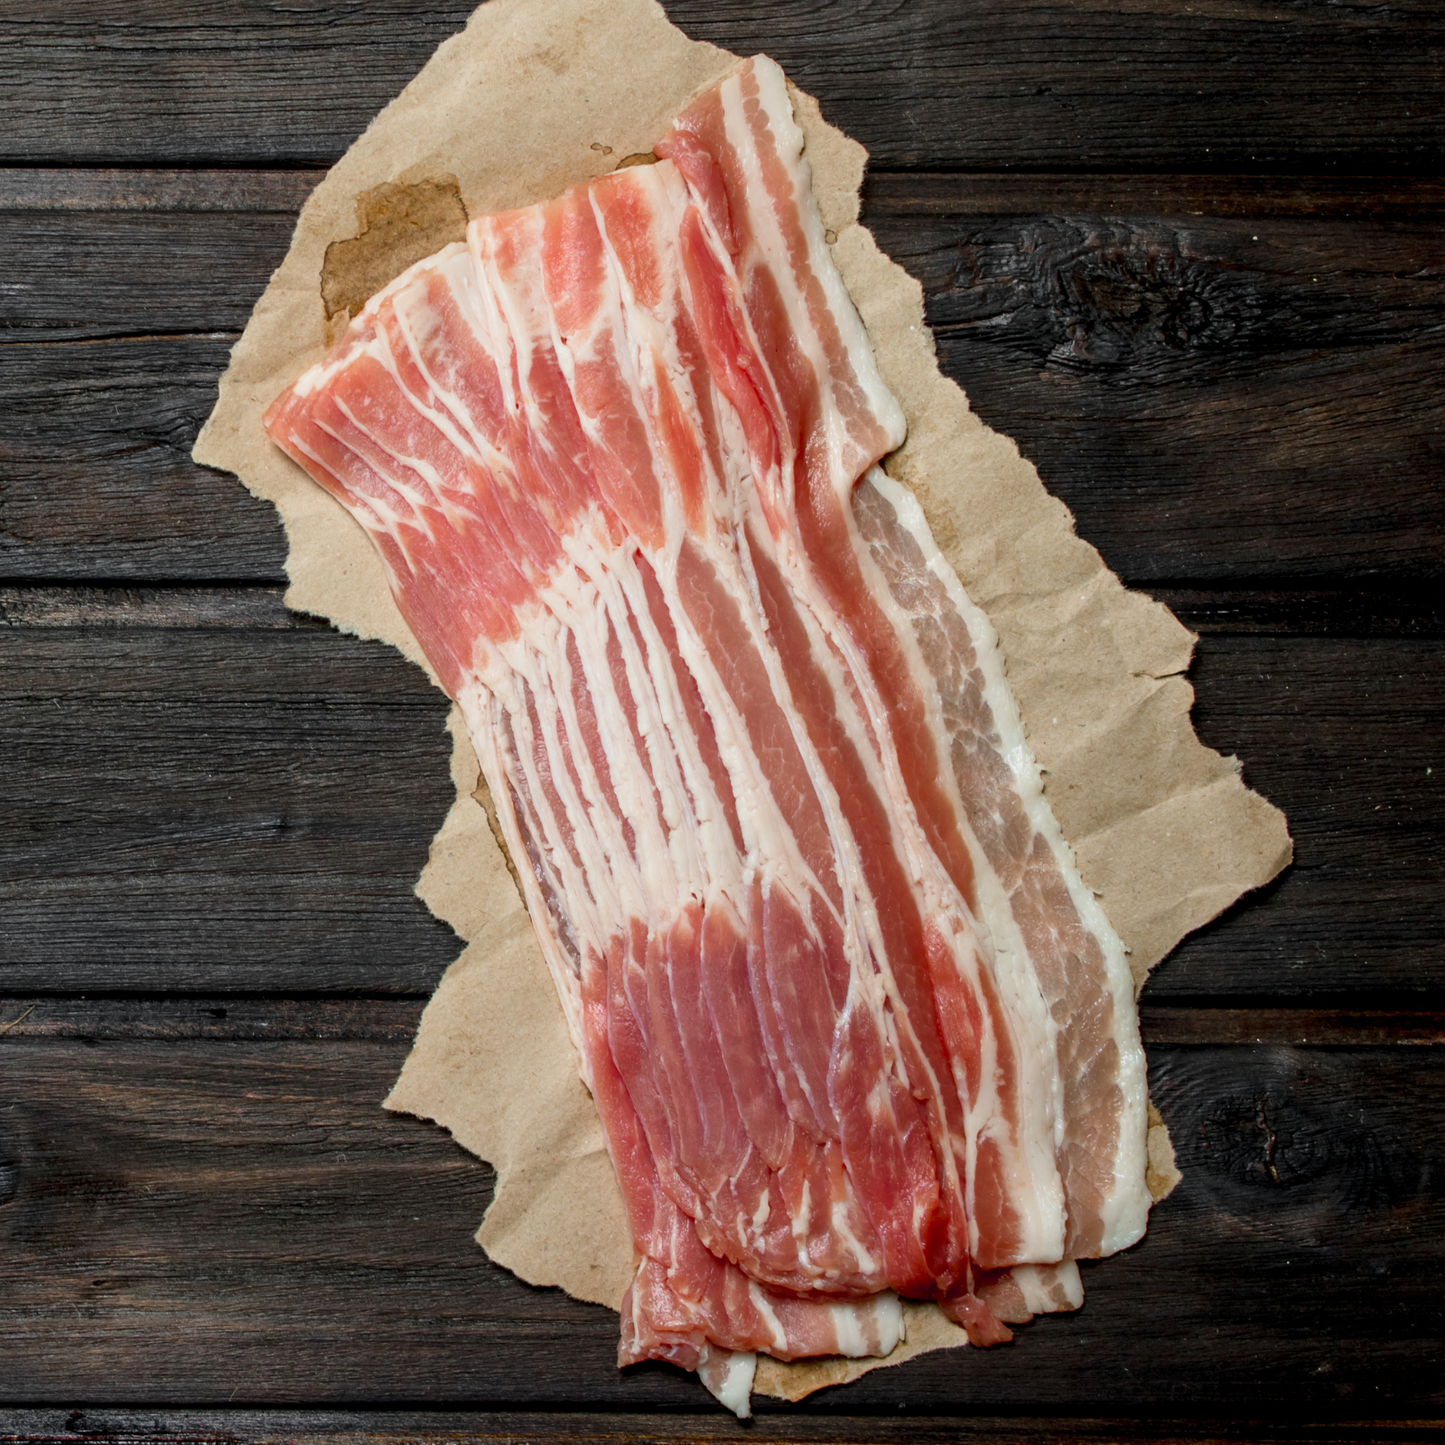 Streaky Bacon Pre-sliced 250g - Frozen